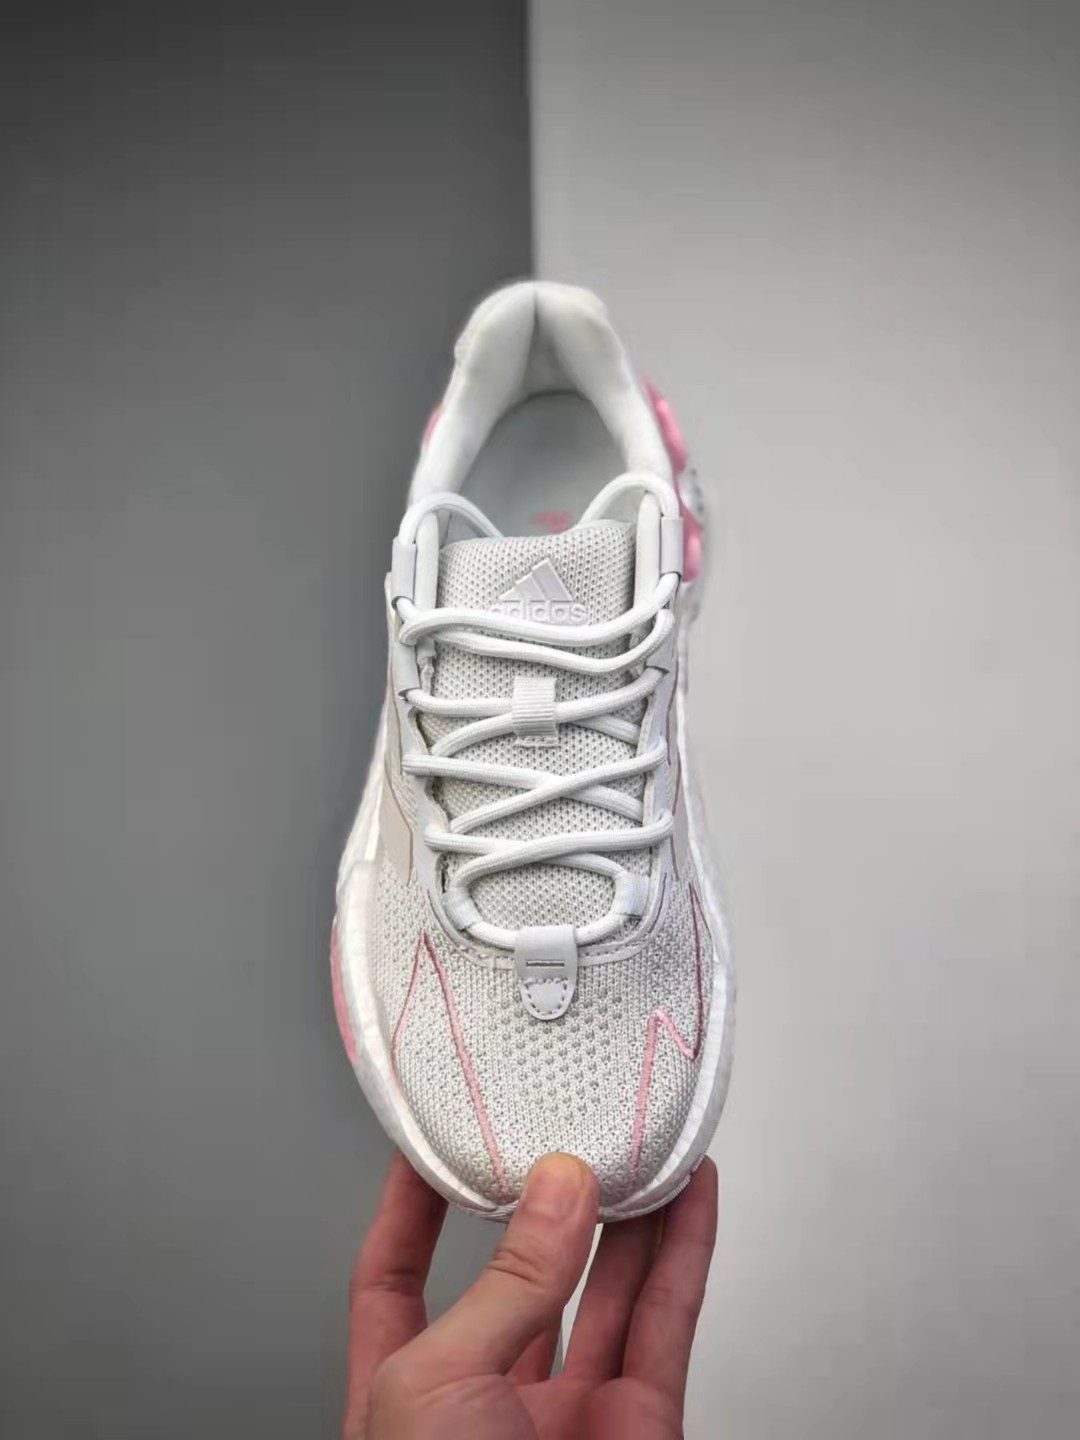 Adidas X9000l4 White GX3487 - Sleek and Stylish Athletic Sneakers